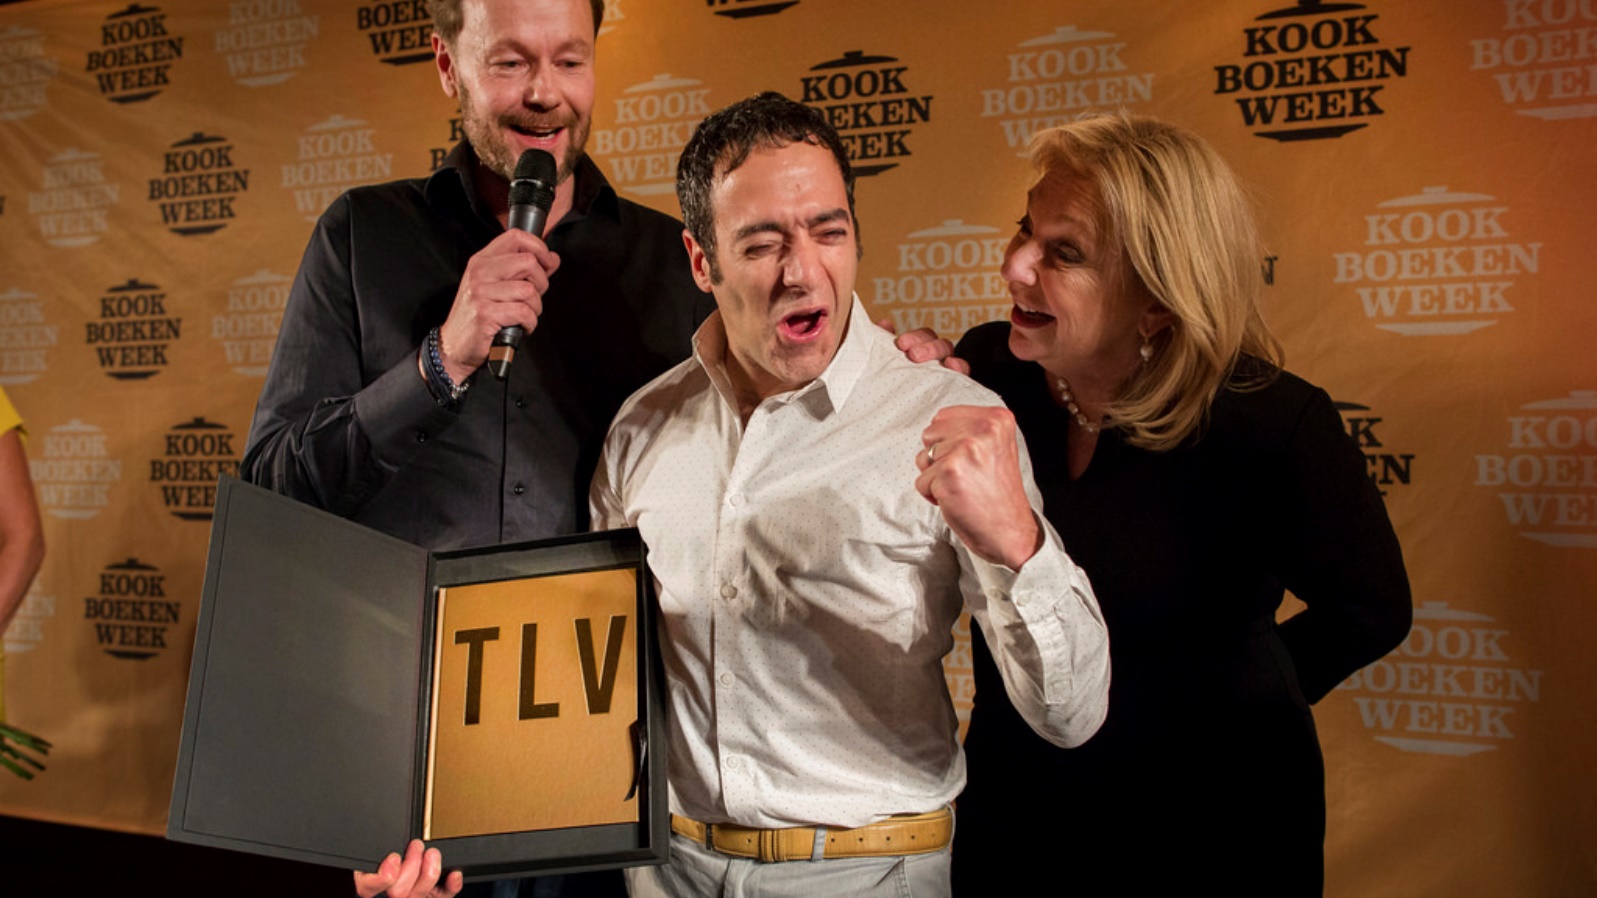 Jigal Krant receives the 2018 (The Golden Cookbook) award from jury chairwoman Janny van der Heijden, right, and presenter Gijs Staverman. Photo by Janus van den Eijnden